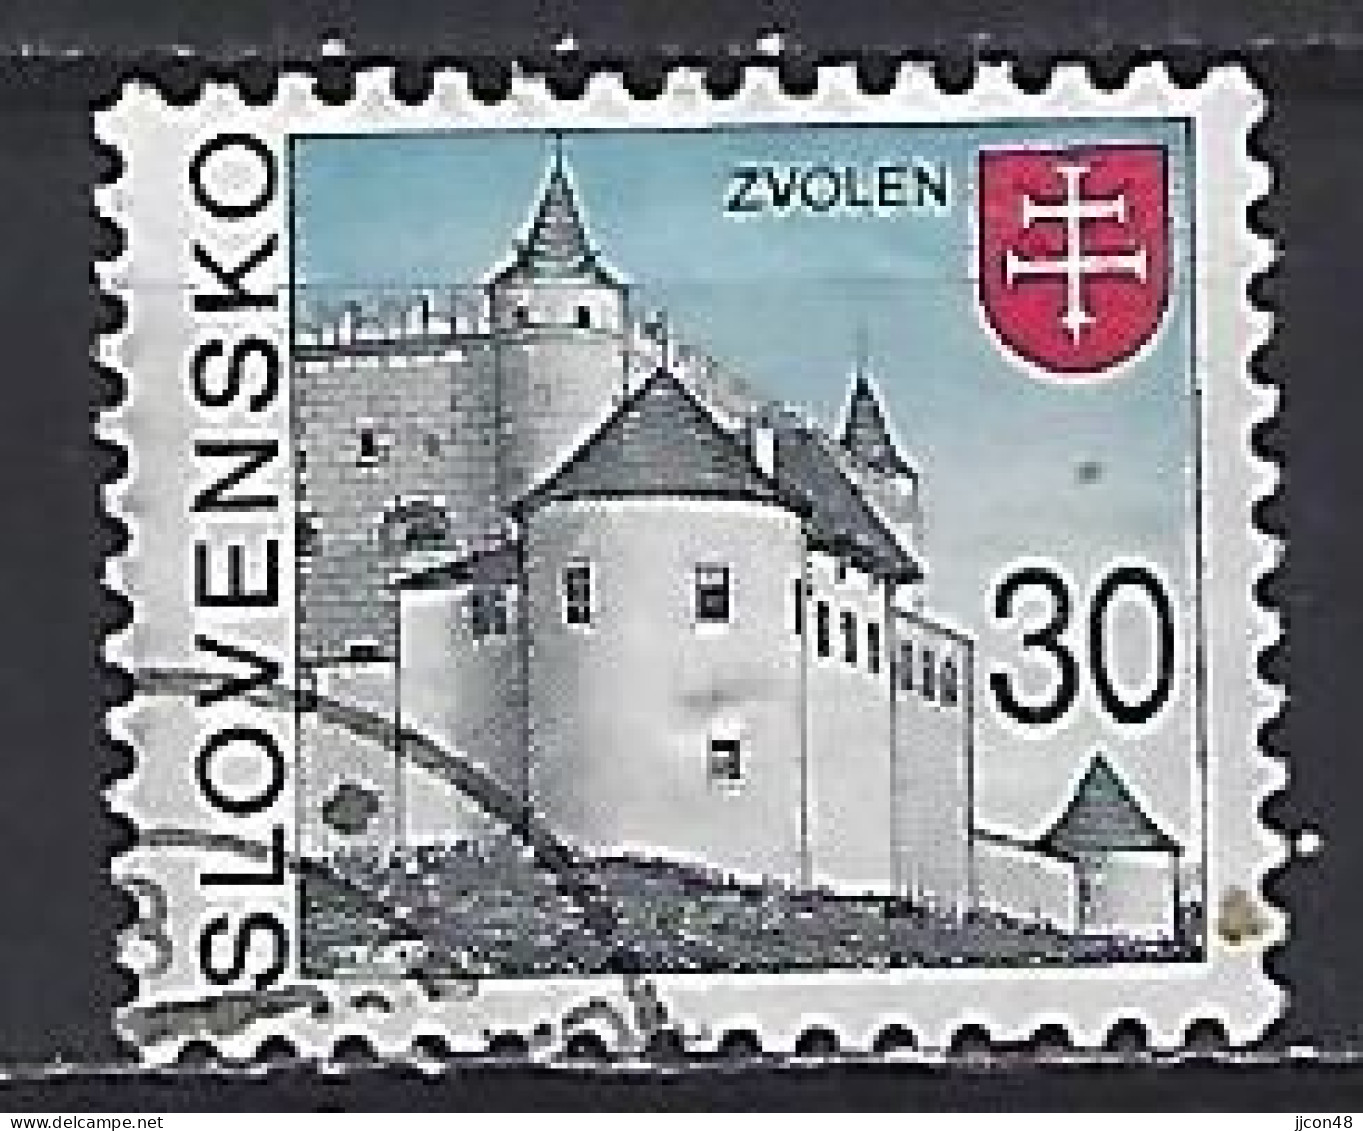 Slovakia 1993  City Arms; Zvolen (o) Mi.179 - Gebraucht